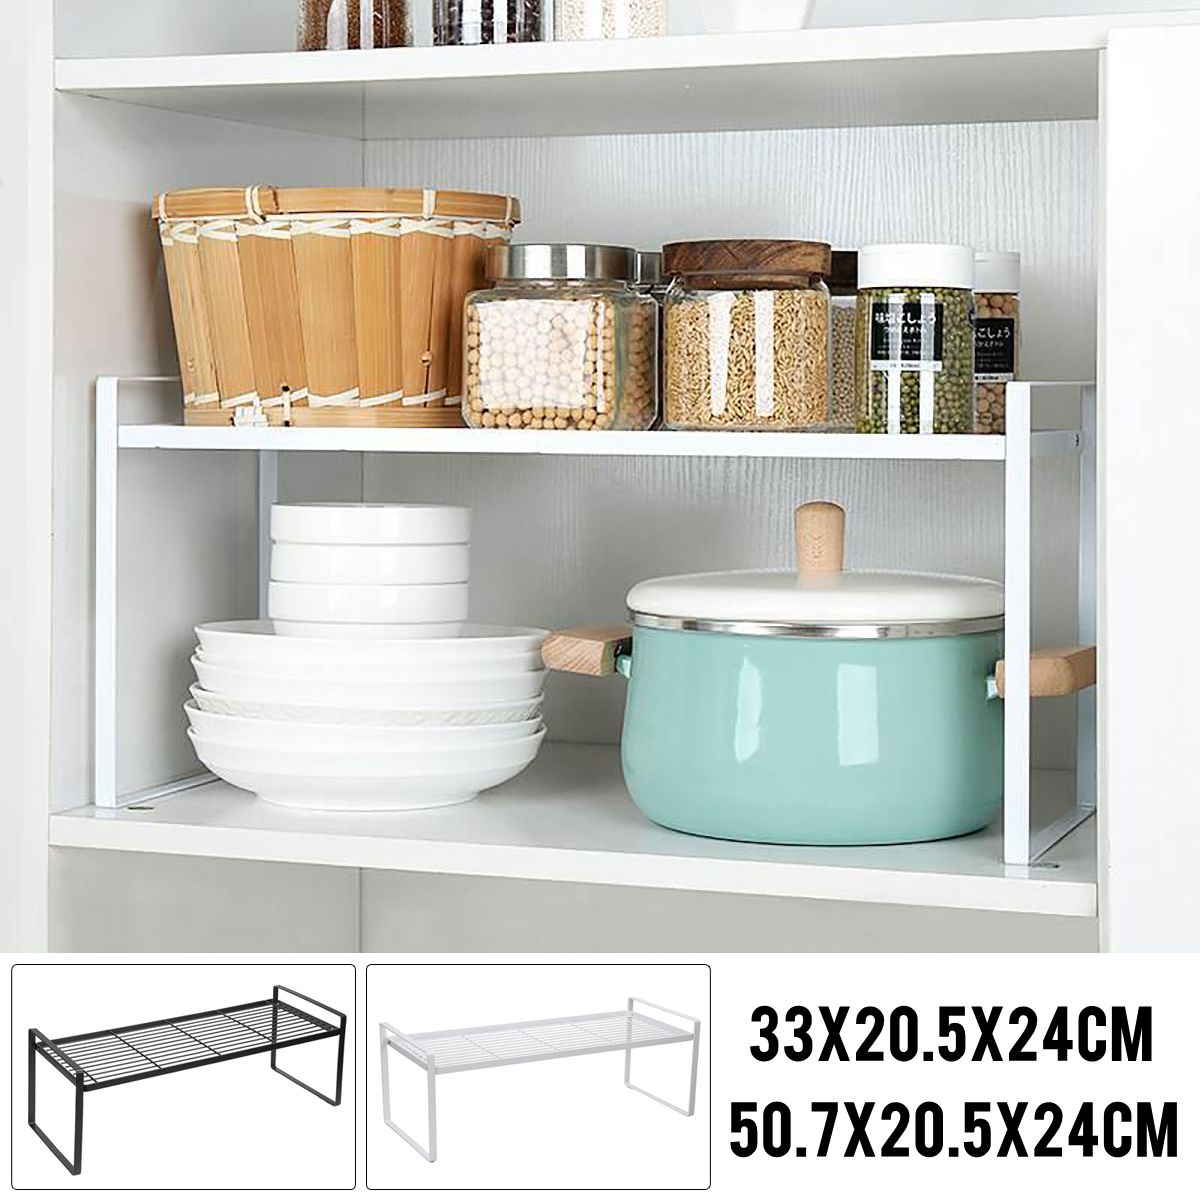 Kitchen-Shelf-Storage-Suction-Basket-Caddy-Wall-Mounted-Rack-Bathroom-Shower-for-Space-Saving-Wardro-1786422-1